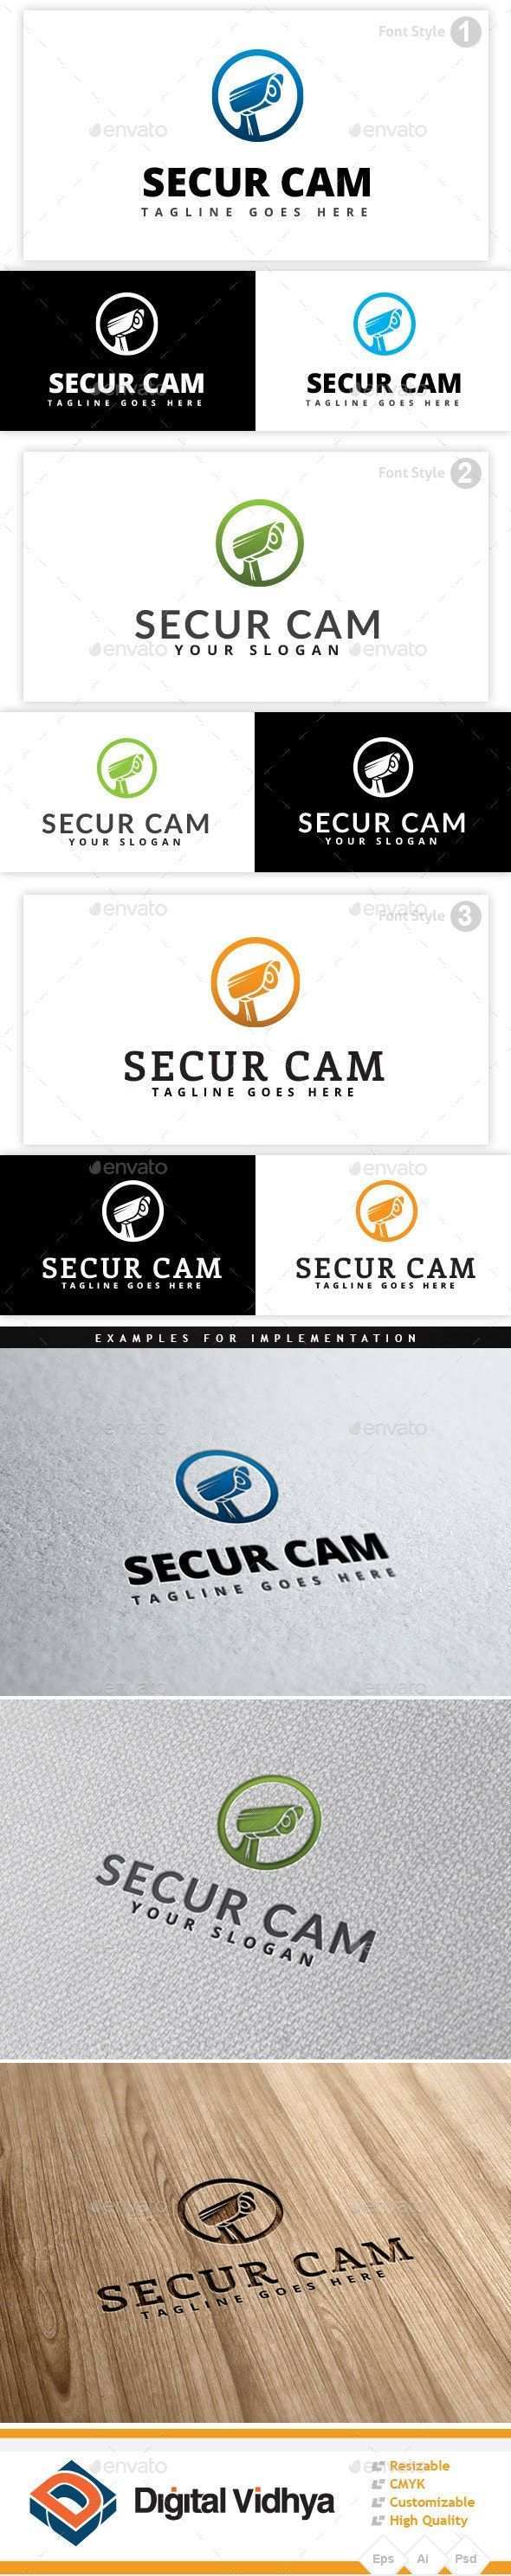 Ad Security Camera Logo Graphicriver Buy Security Camera Logo By Digisamaritan On Graphicriver File Description Securi Logo Design Vorlage Uberwachungskamera Und Camera Logo